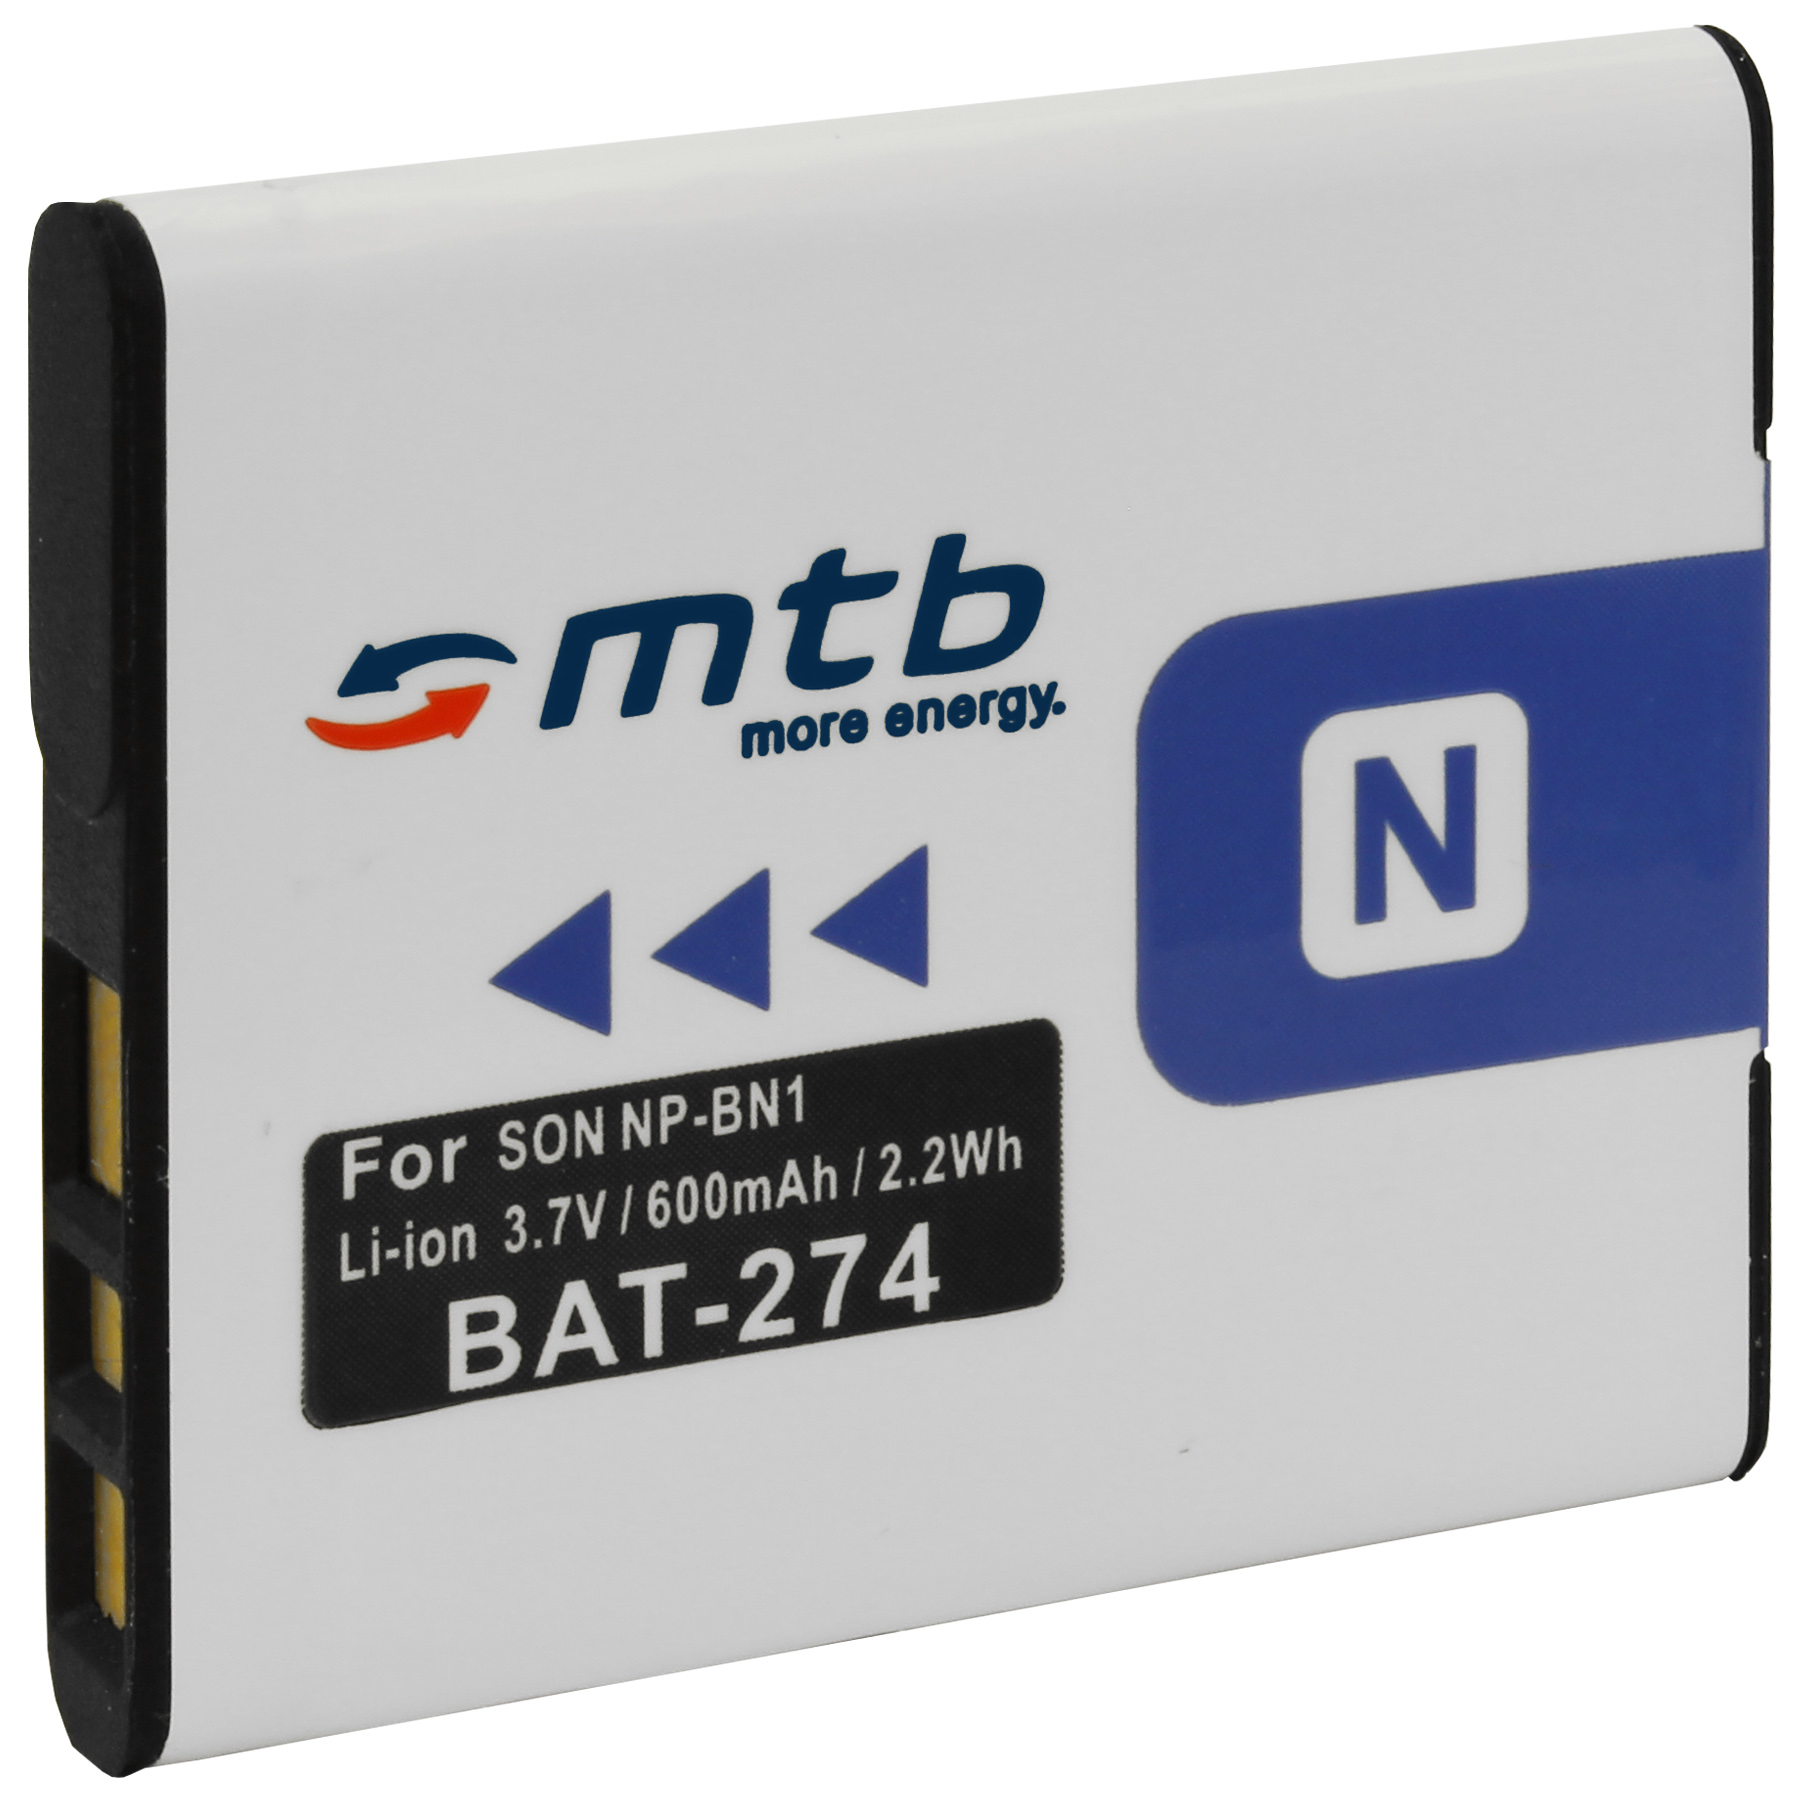 MTB MORE ENERGY BAT-274 mAh Akku, Li-Ion, NP-BN1 600